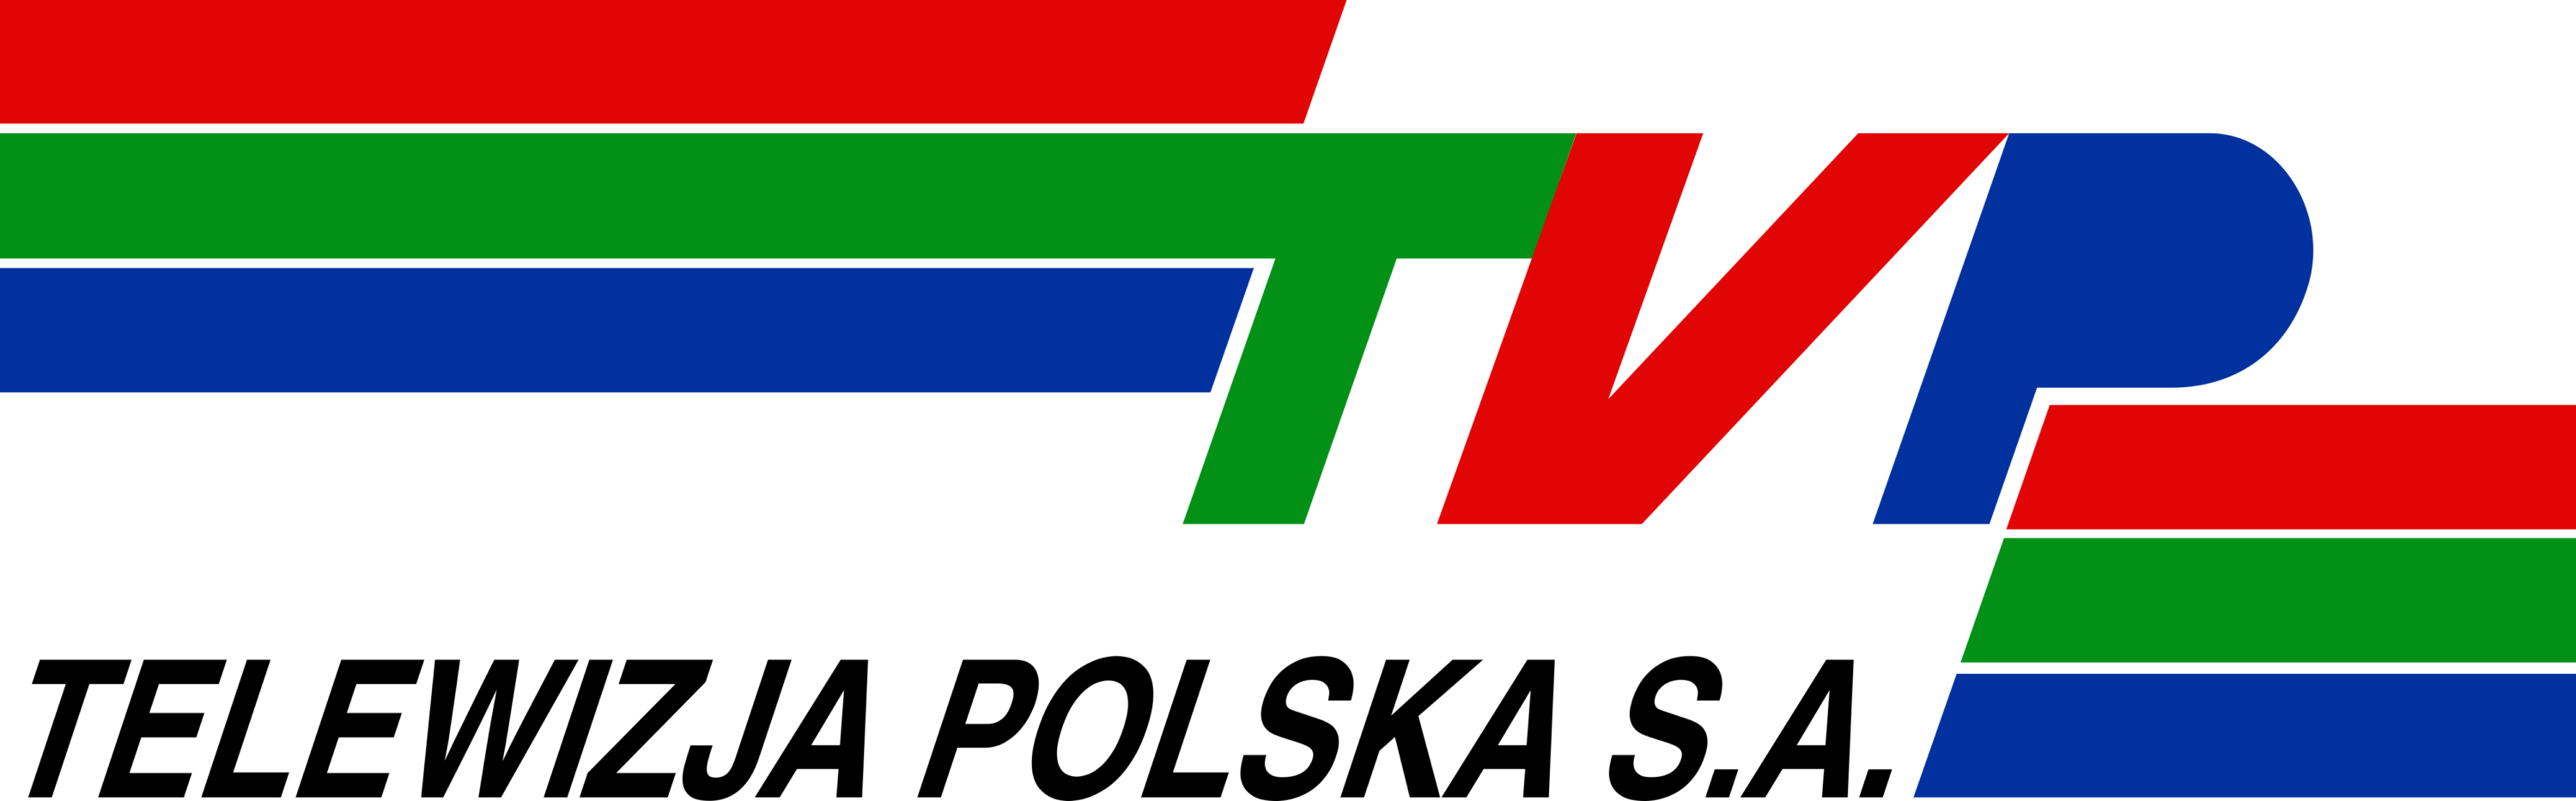 Telewizja Polska Logo 1992